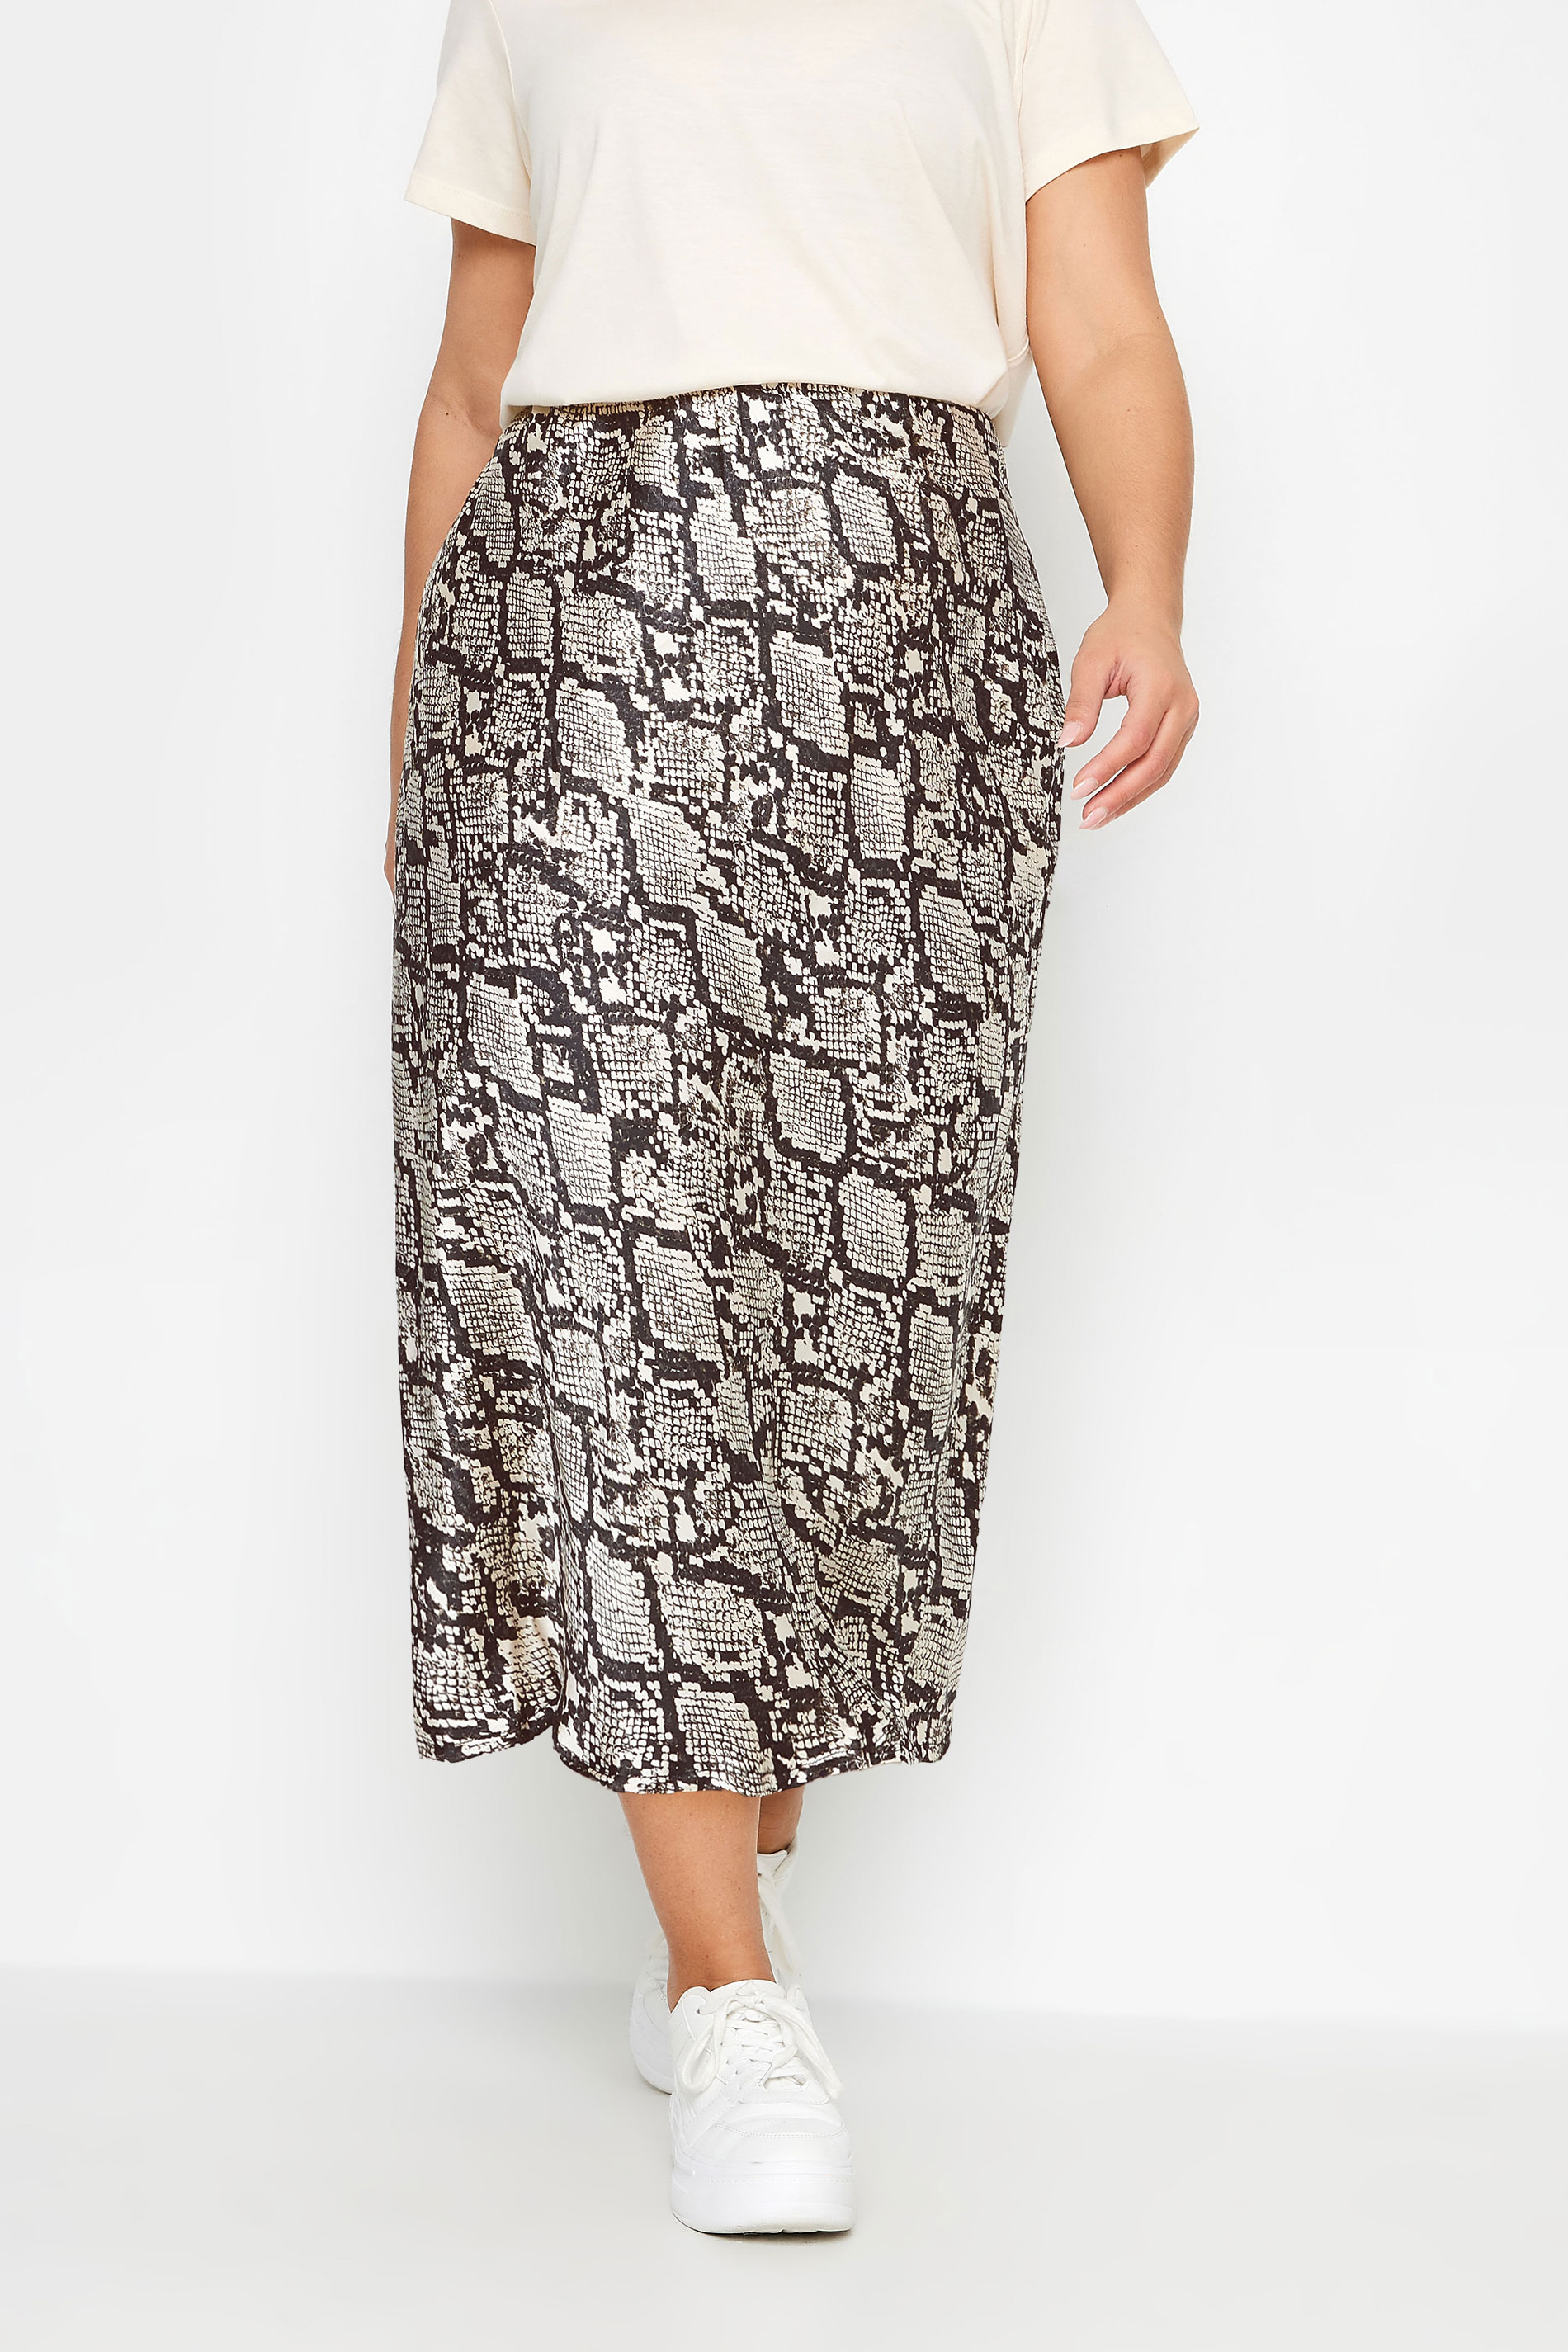 YOURS Plus Size Grey Snake Print Satin Midi Skirt | Yours Clothing 2